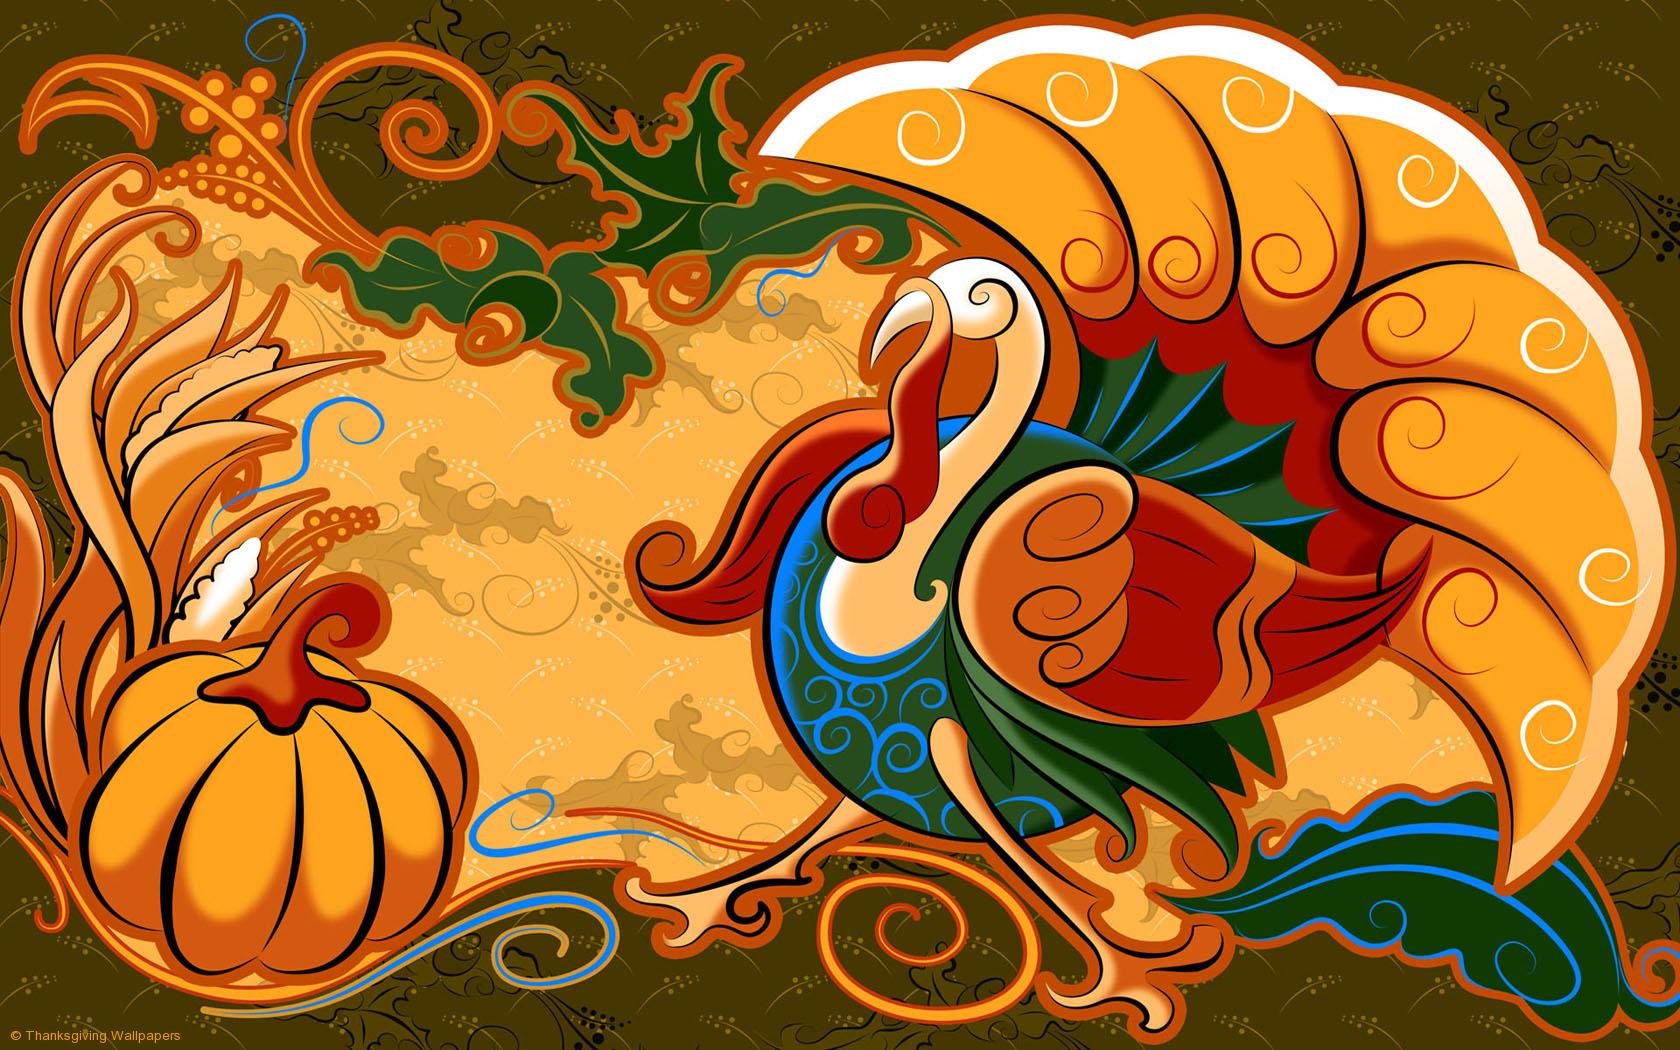 Turkey Pictures For Thanksgiving - Desktop Backgrounds